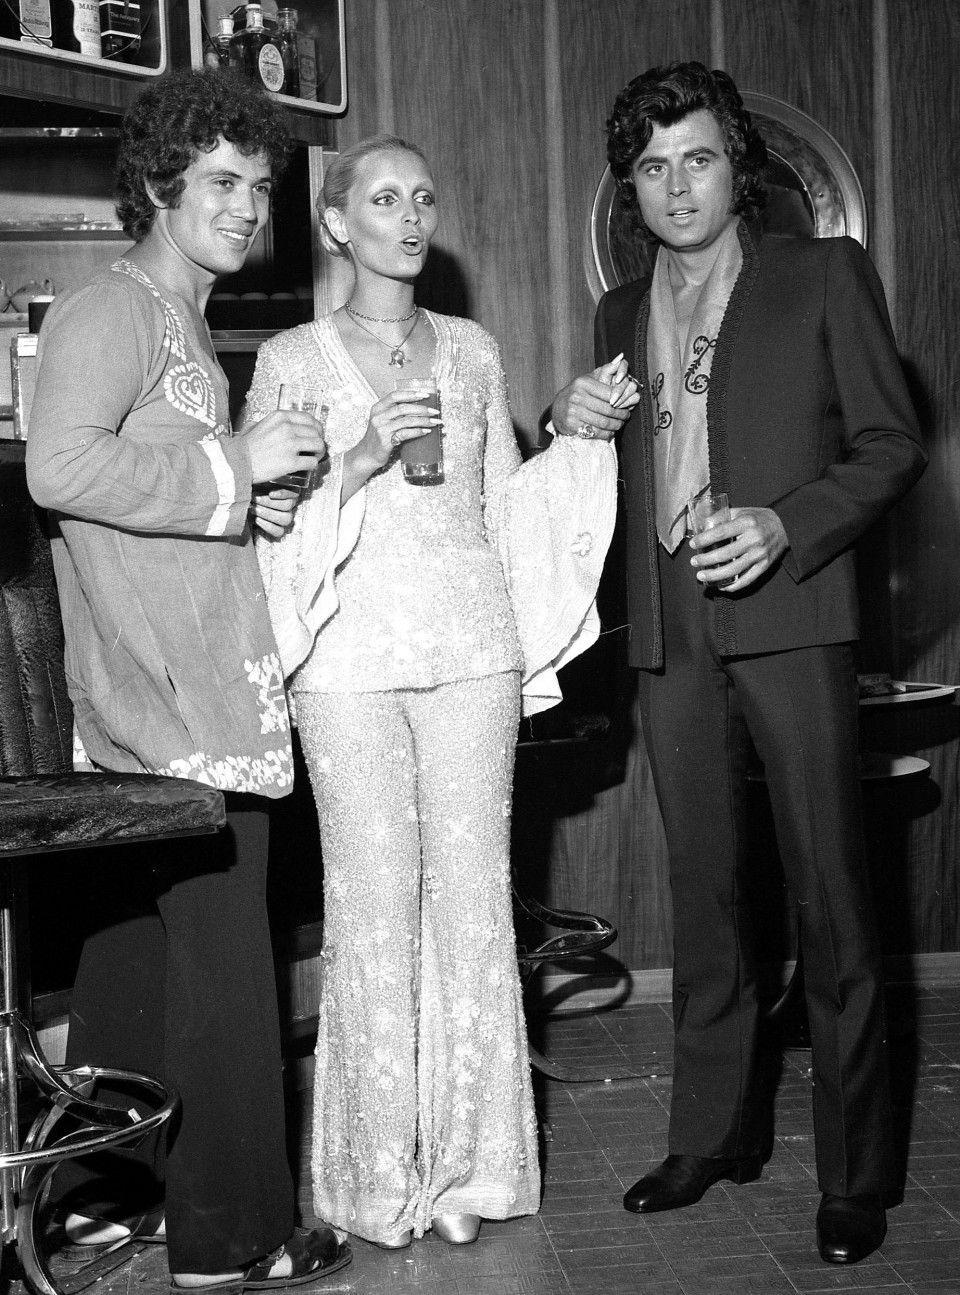 Little Tony, Patty Pravo and Lucio Battisti perform at the 1970 Festivalbar.